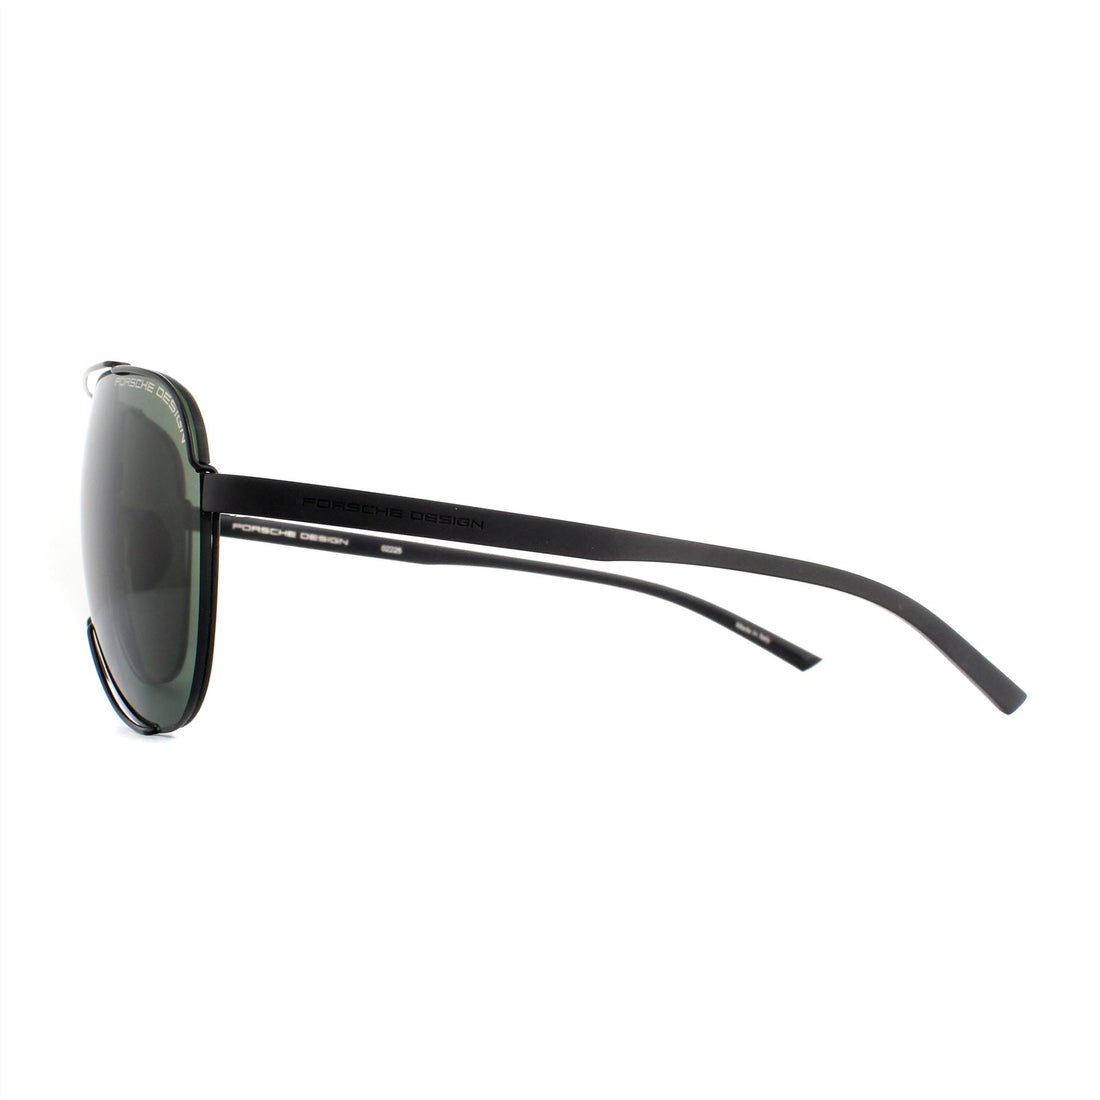 Porsche Design Sunglasses P8682 A Matte Black Green